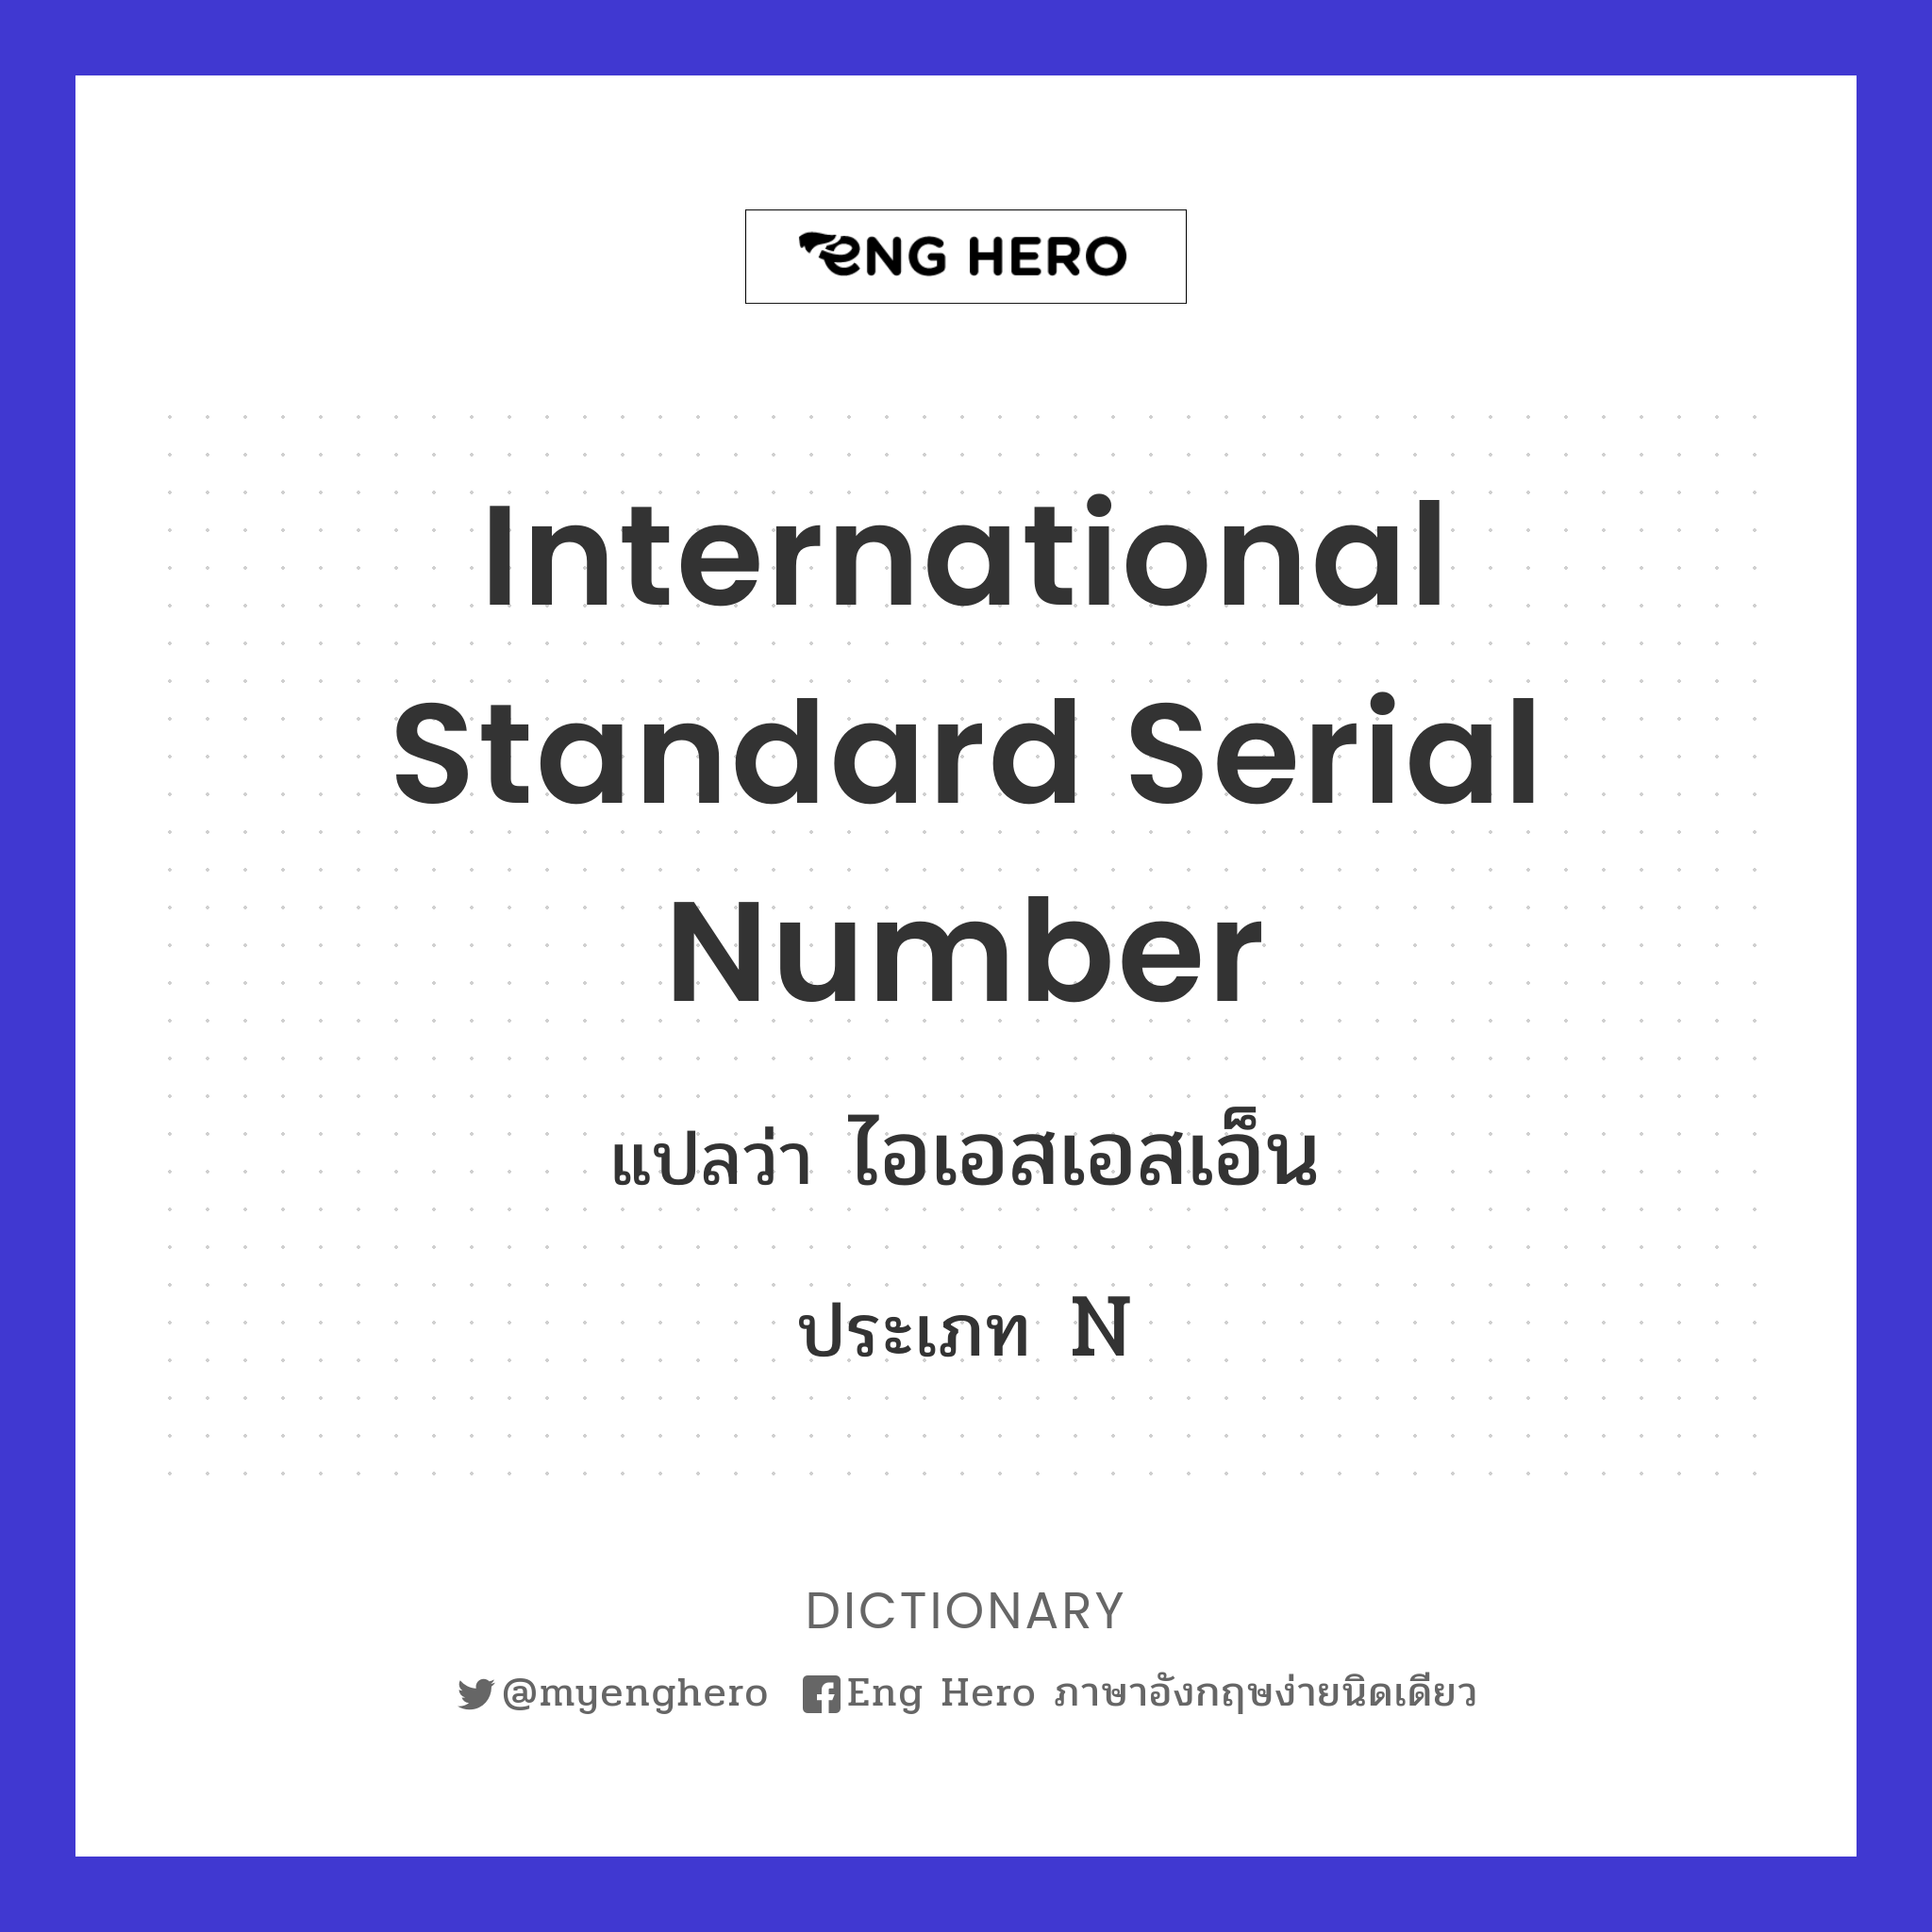 International Standard Serial Number